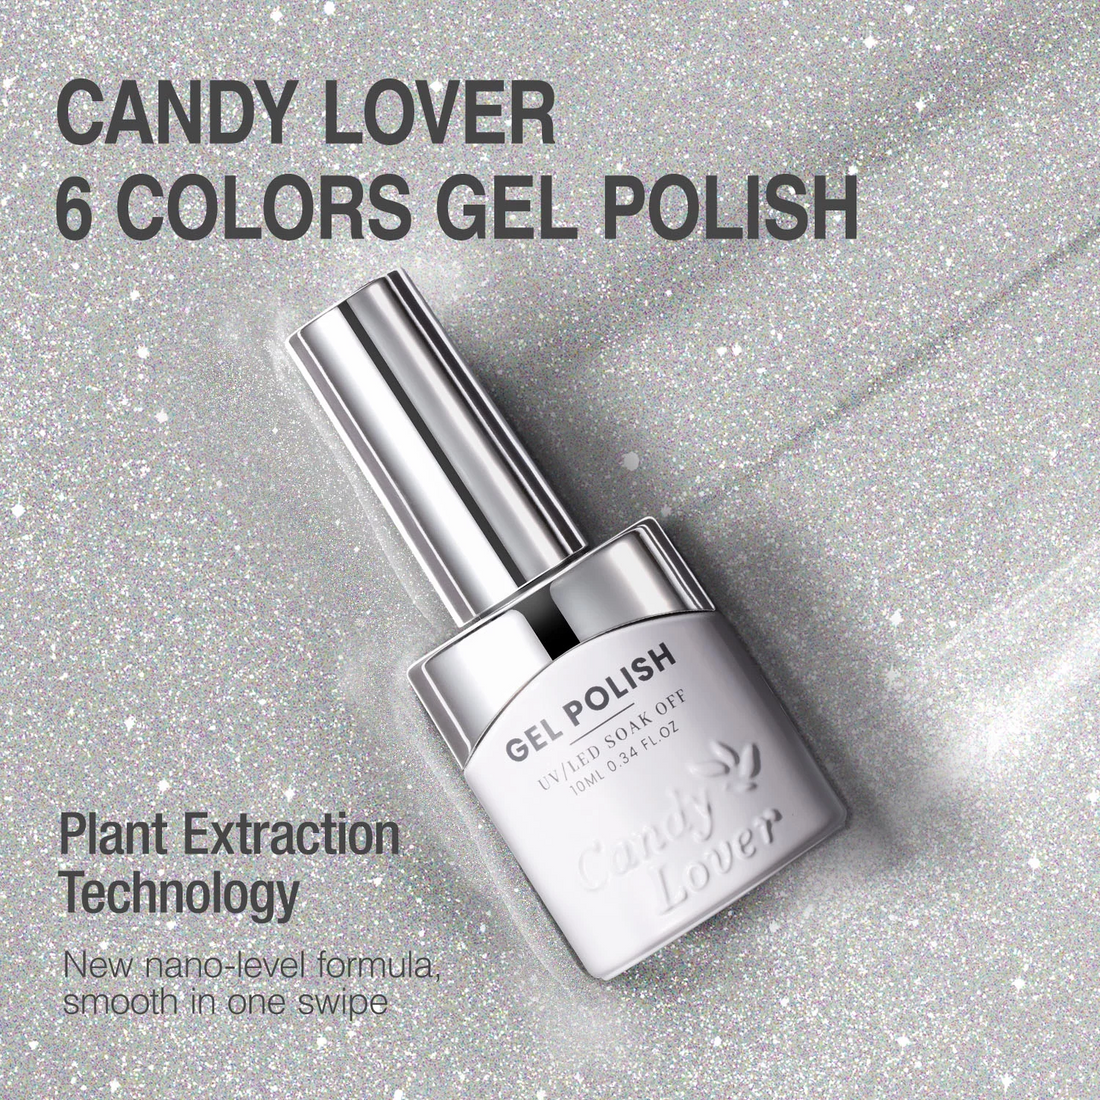 Candy Lover Gel Nail Polish, 6 Glitter Colors Nail Gel Polish Set, Quick Dry Long Lasting Soak off Gel Nails Set